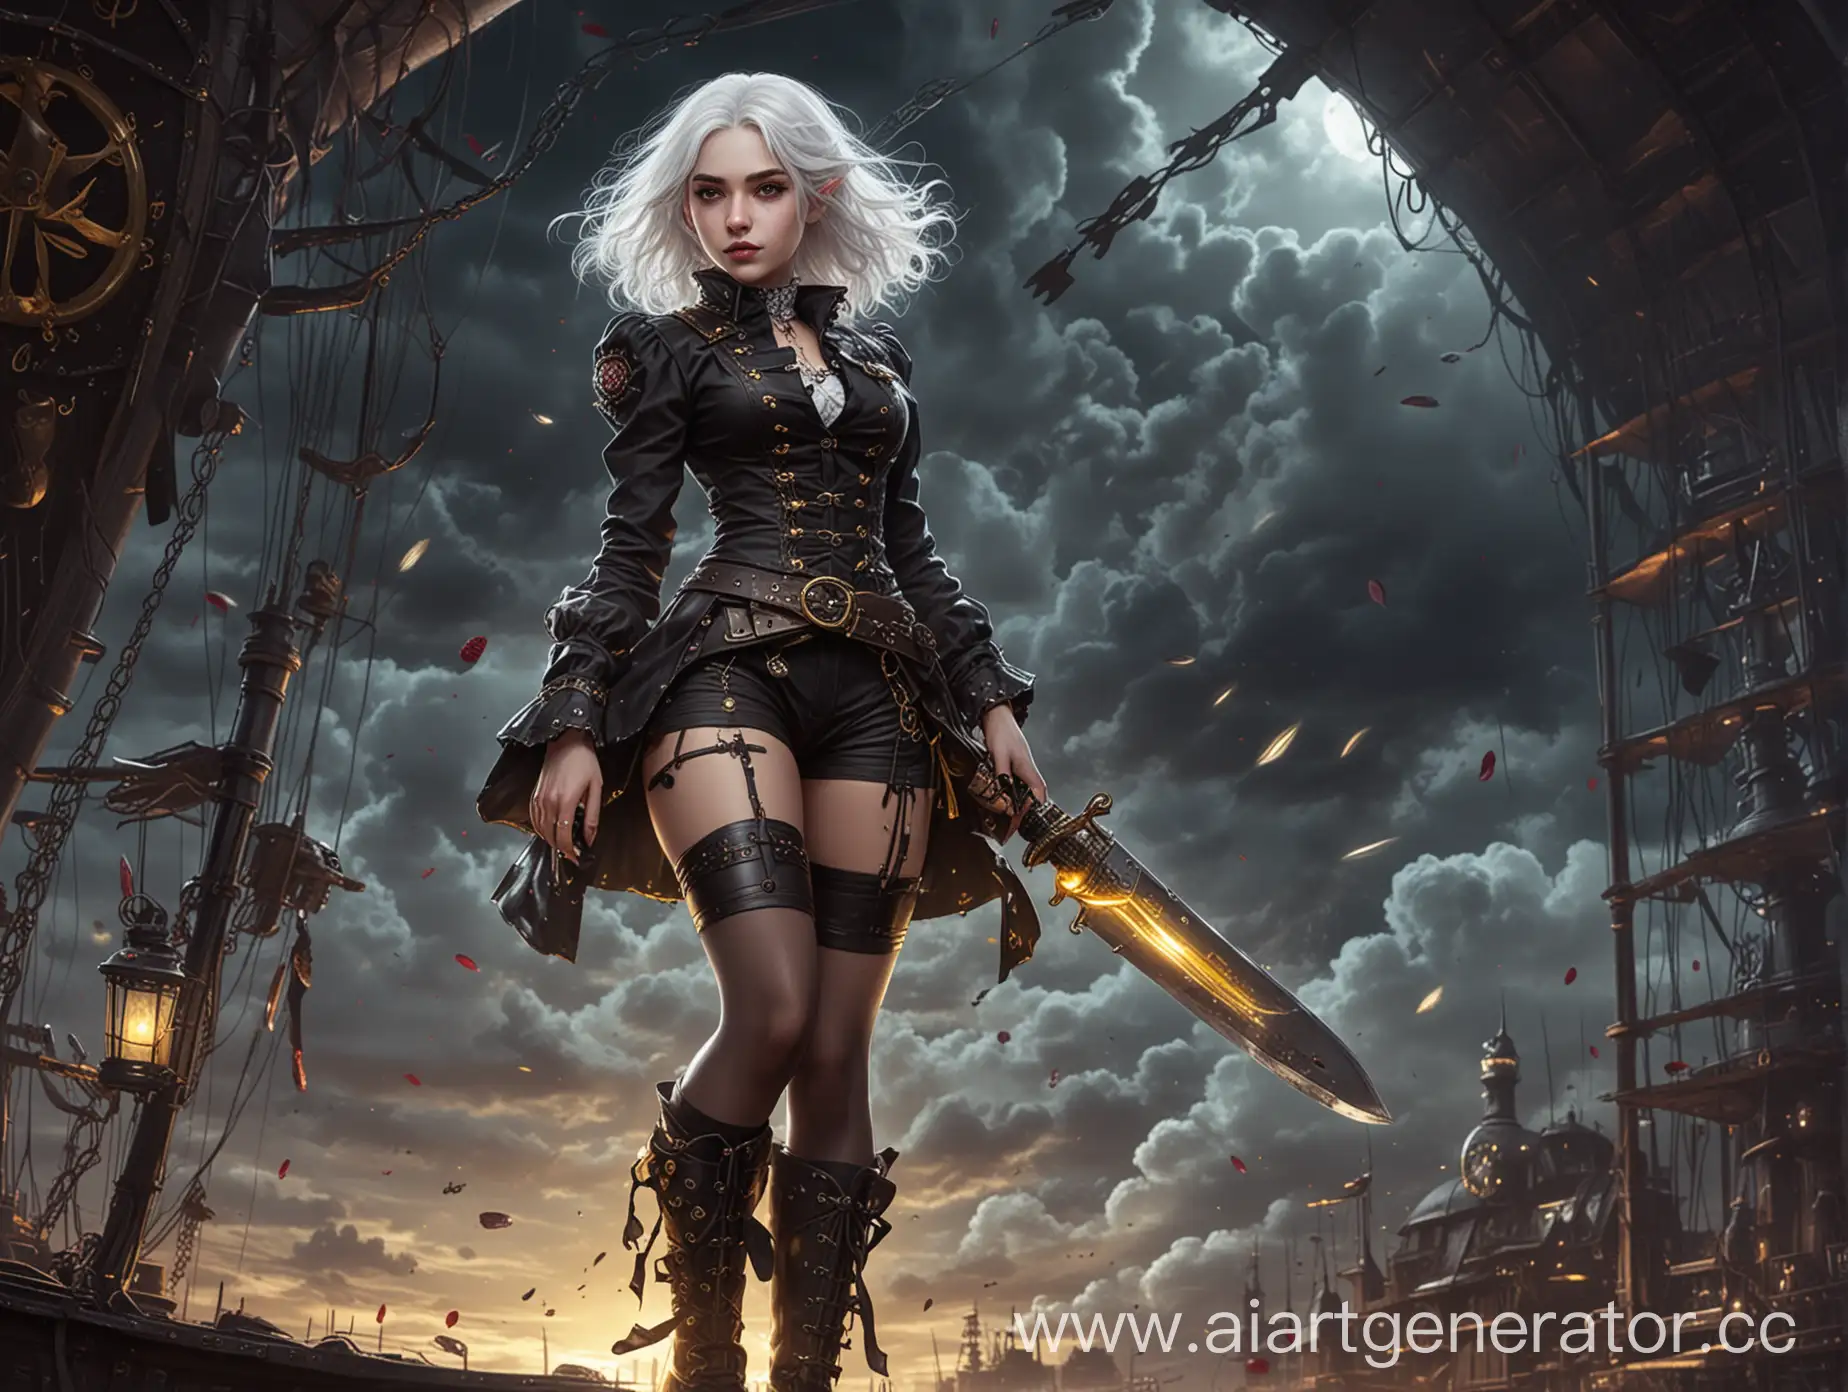 Steampunk-Dark-Fantasy-Art-Girl-with-Glowing-Hair-on-Airship